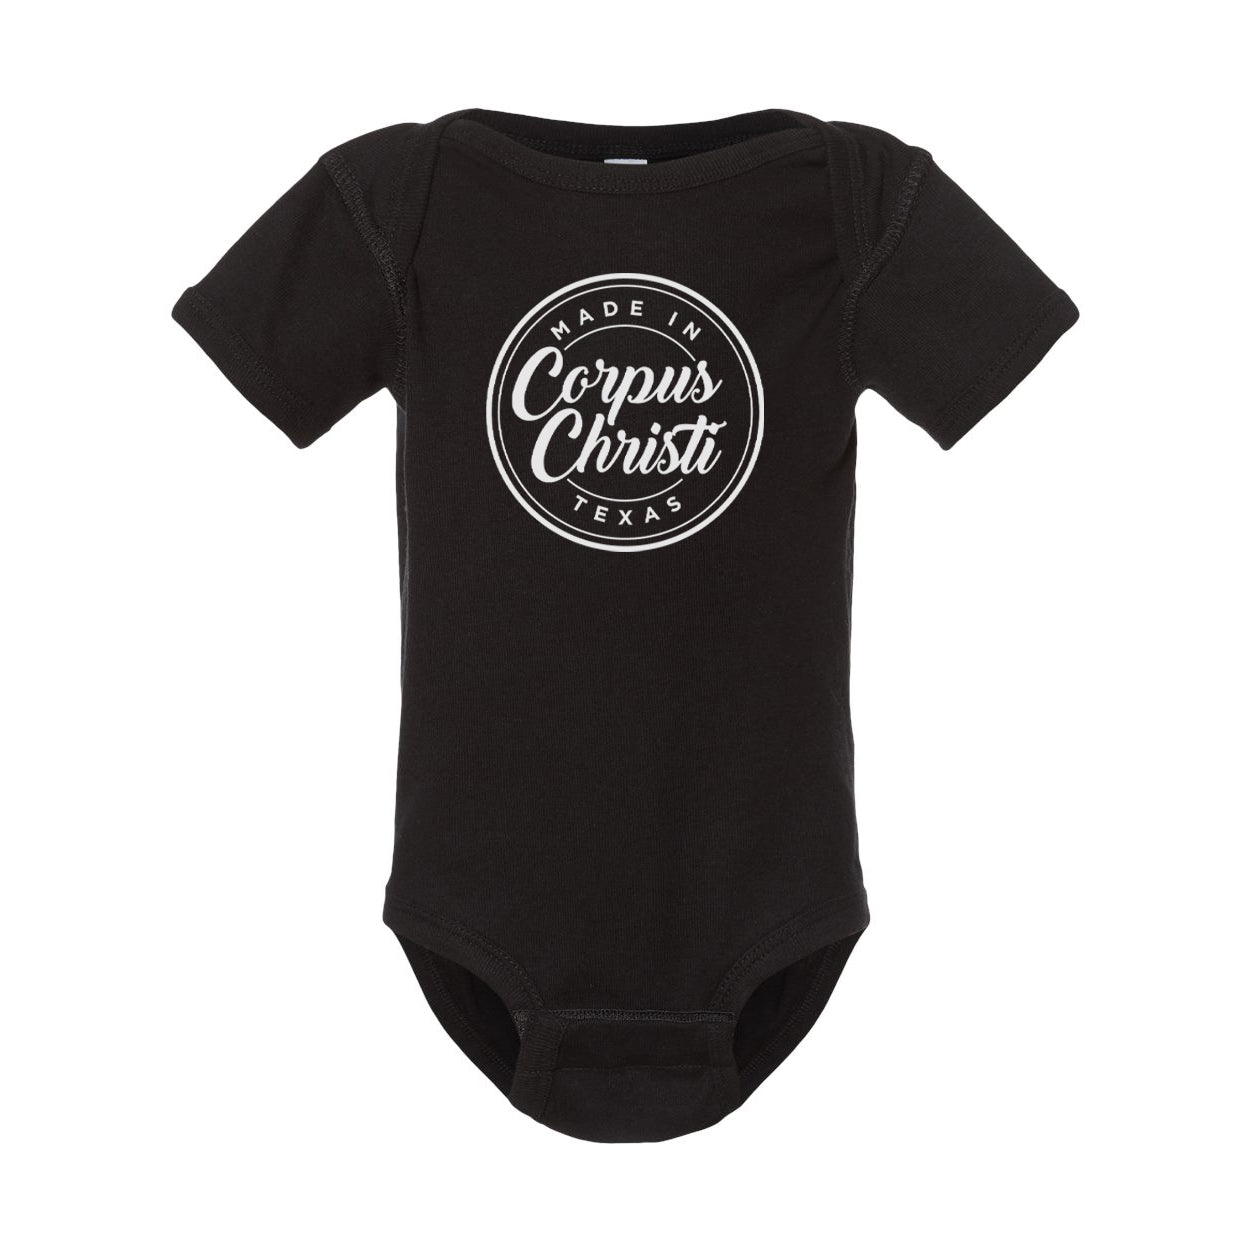 Infant Onesie - Made in Corpus Christi